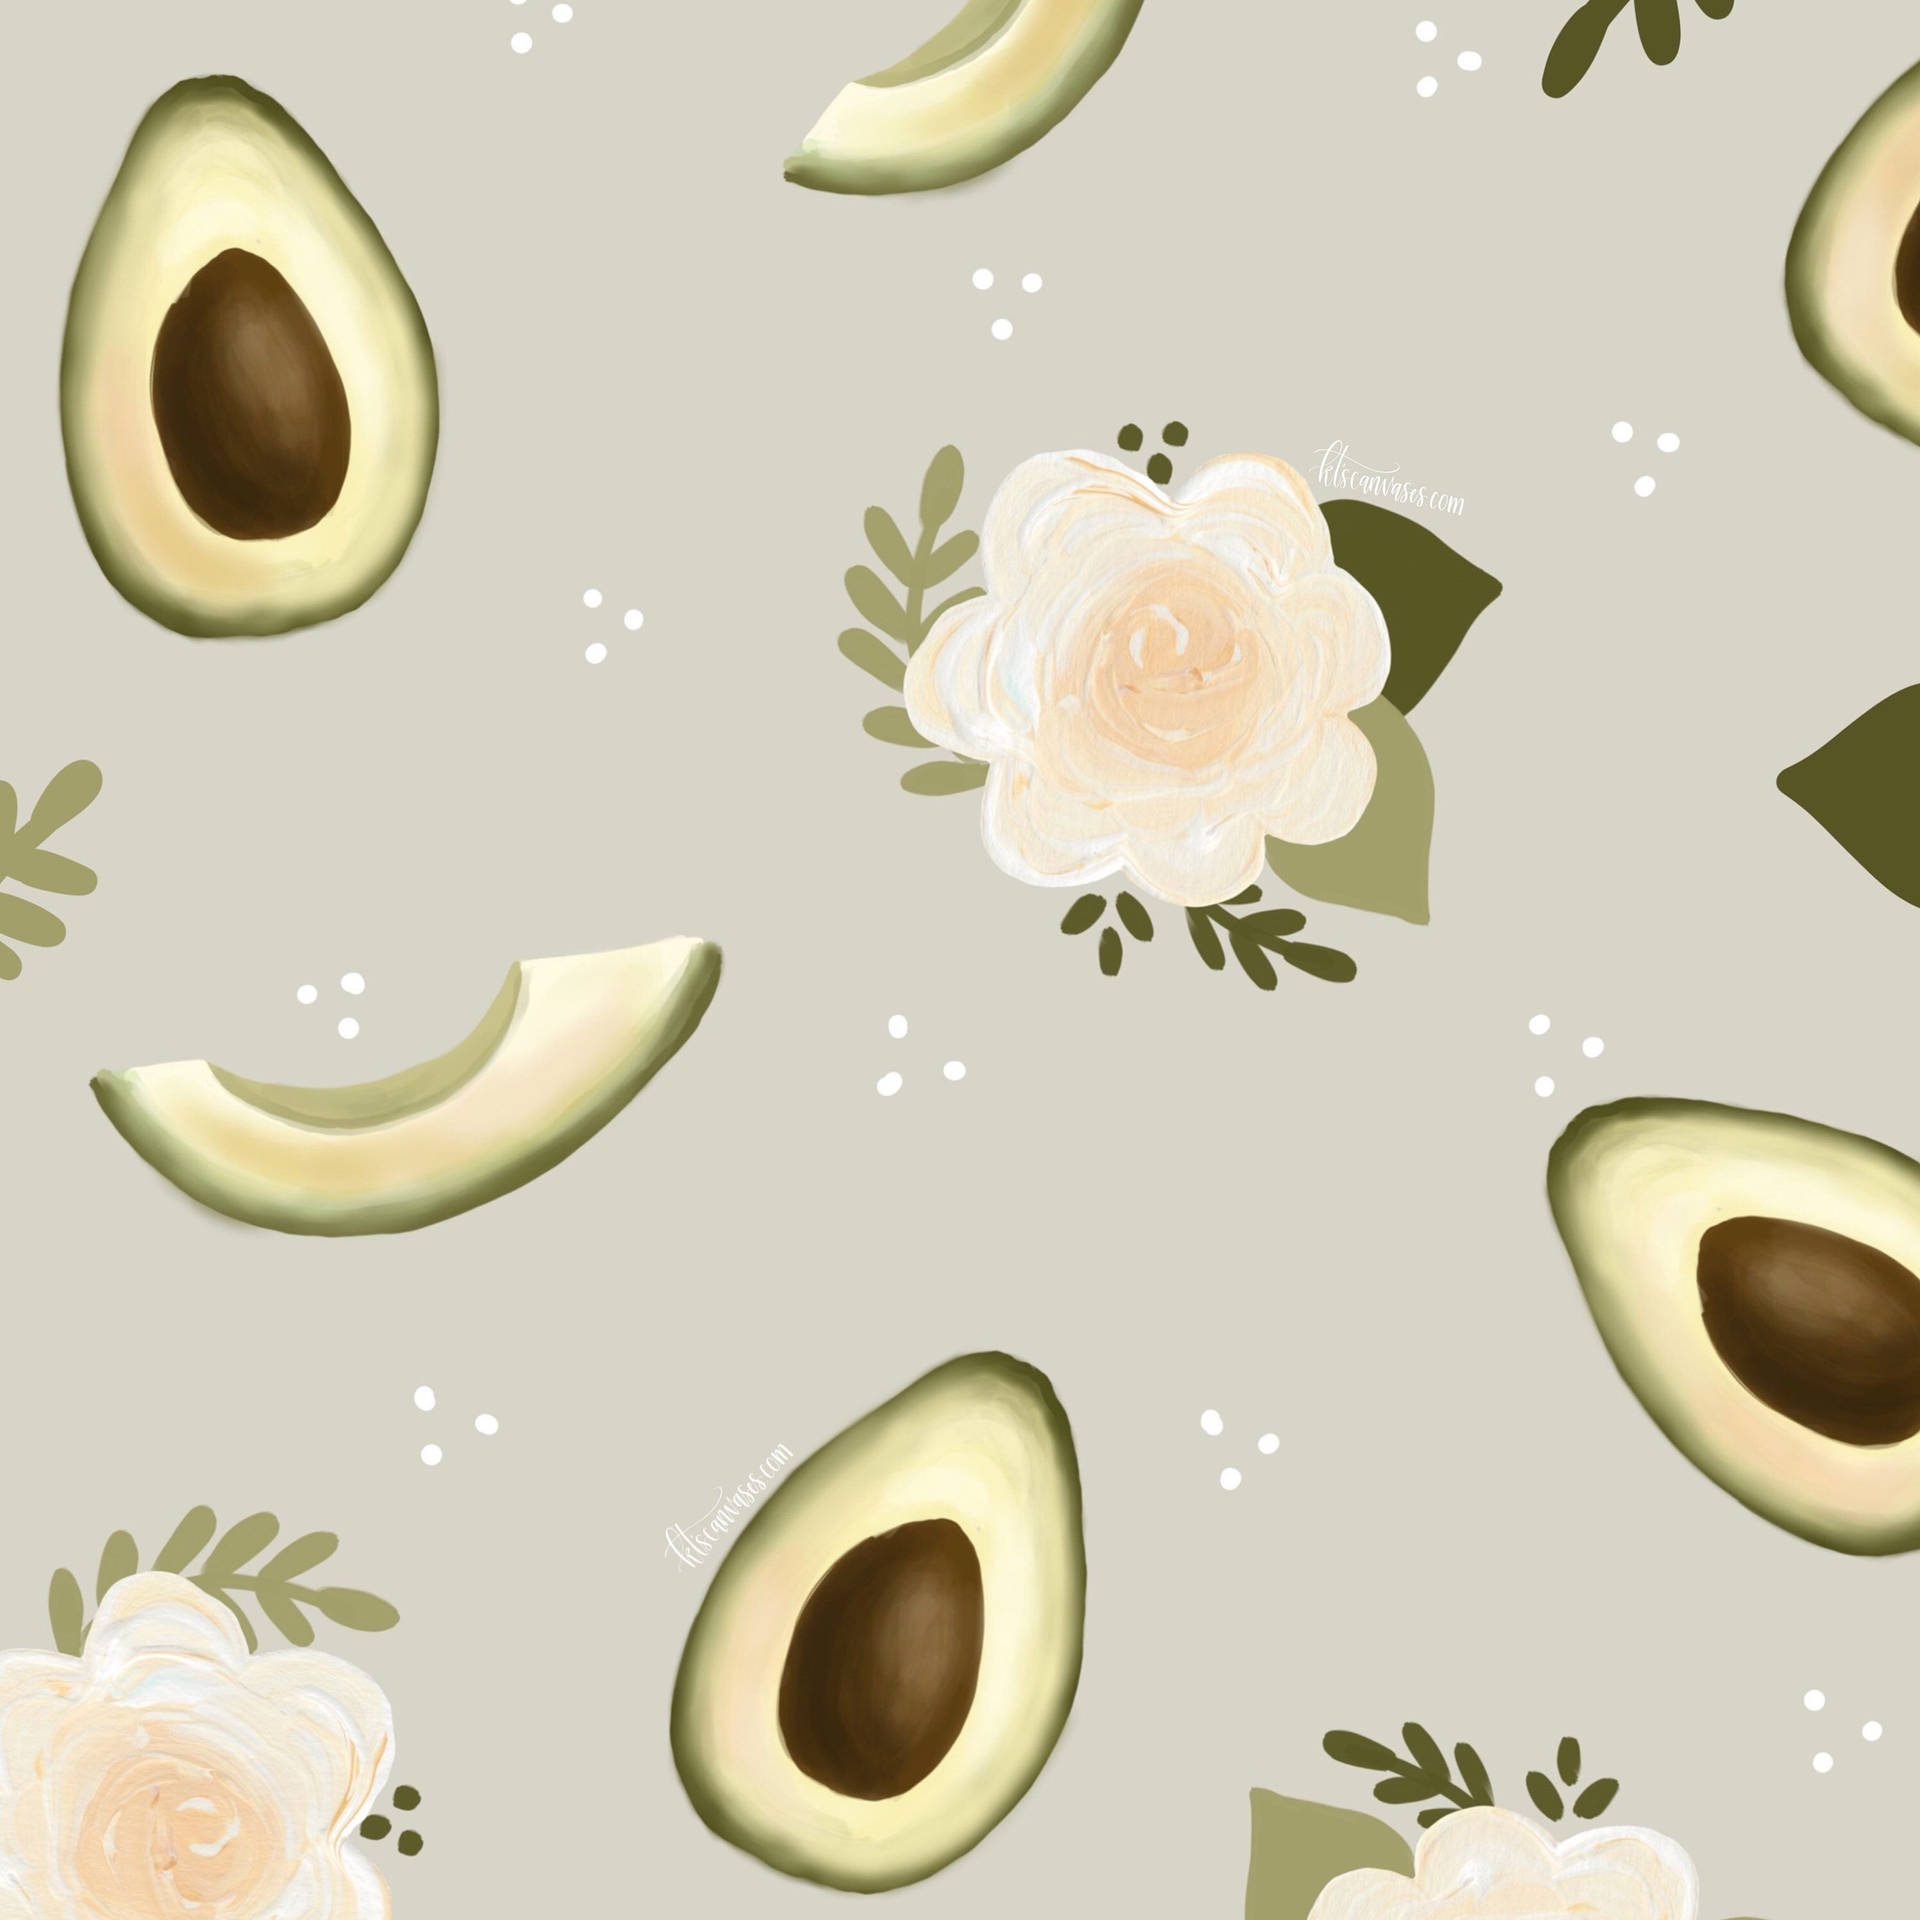 Free Cute Avocado Wallpaper Downloads, [100+] Cute Avocado Wallpapers for  FREE 